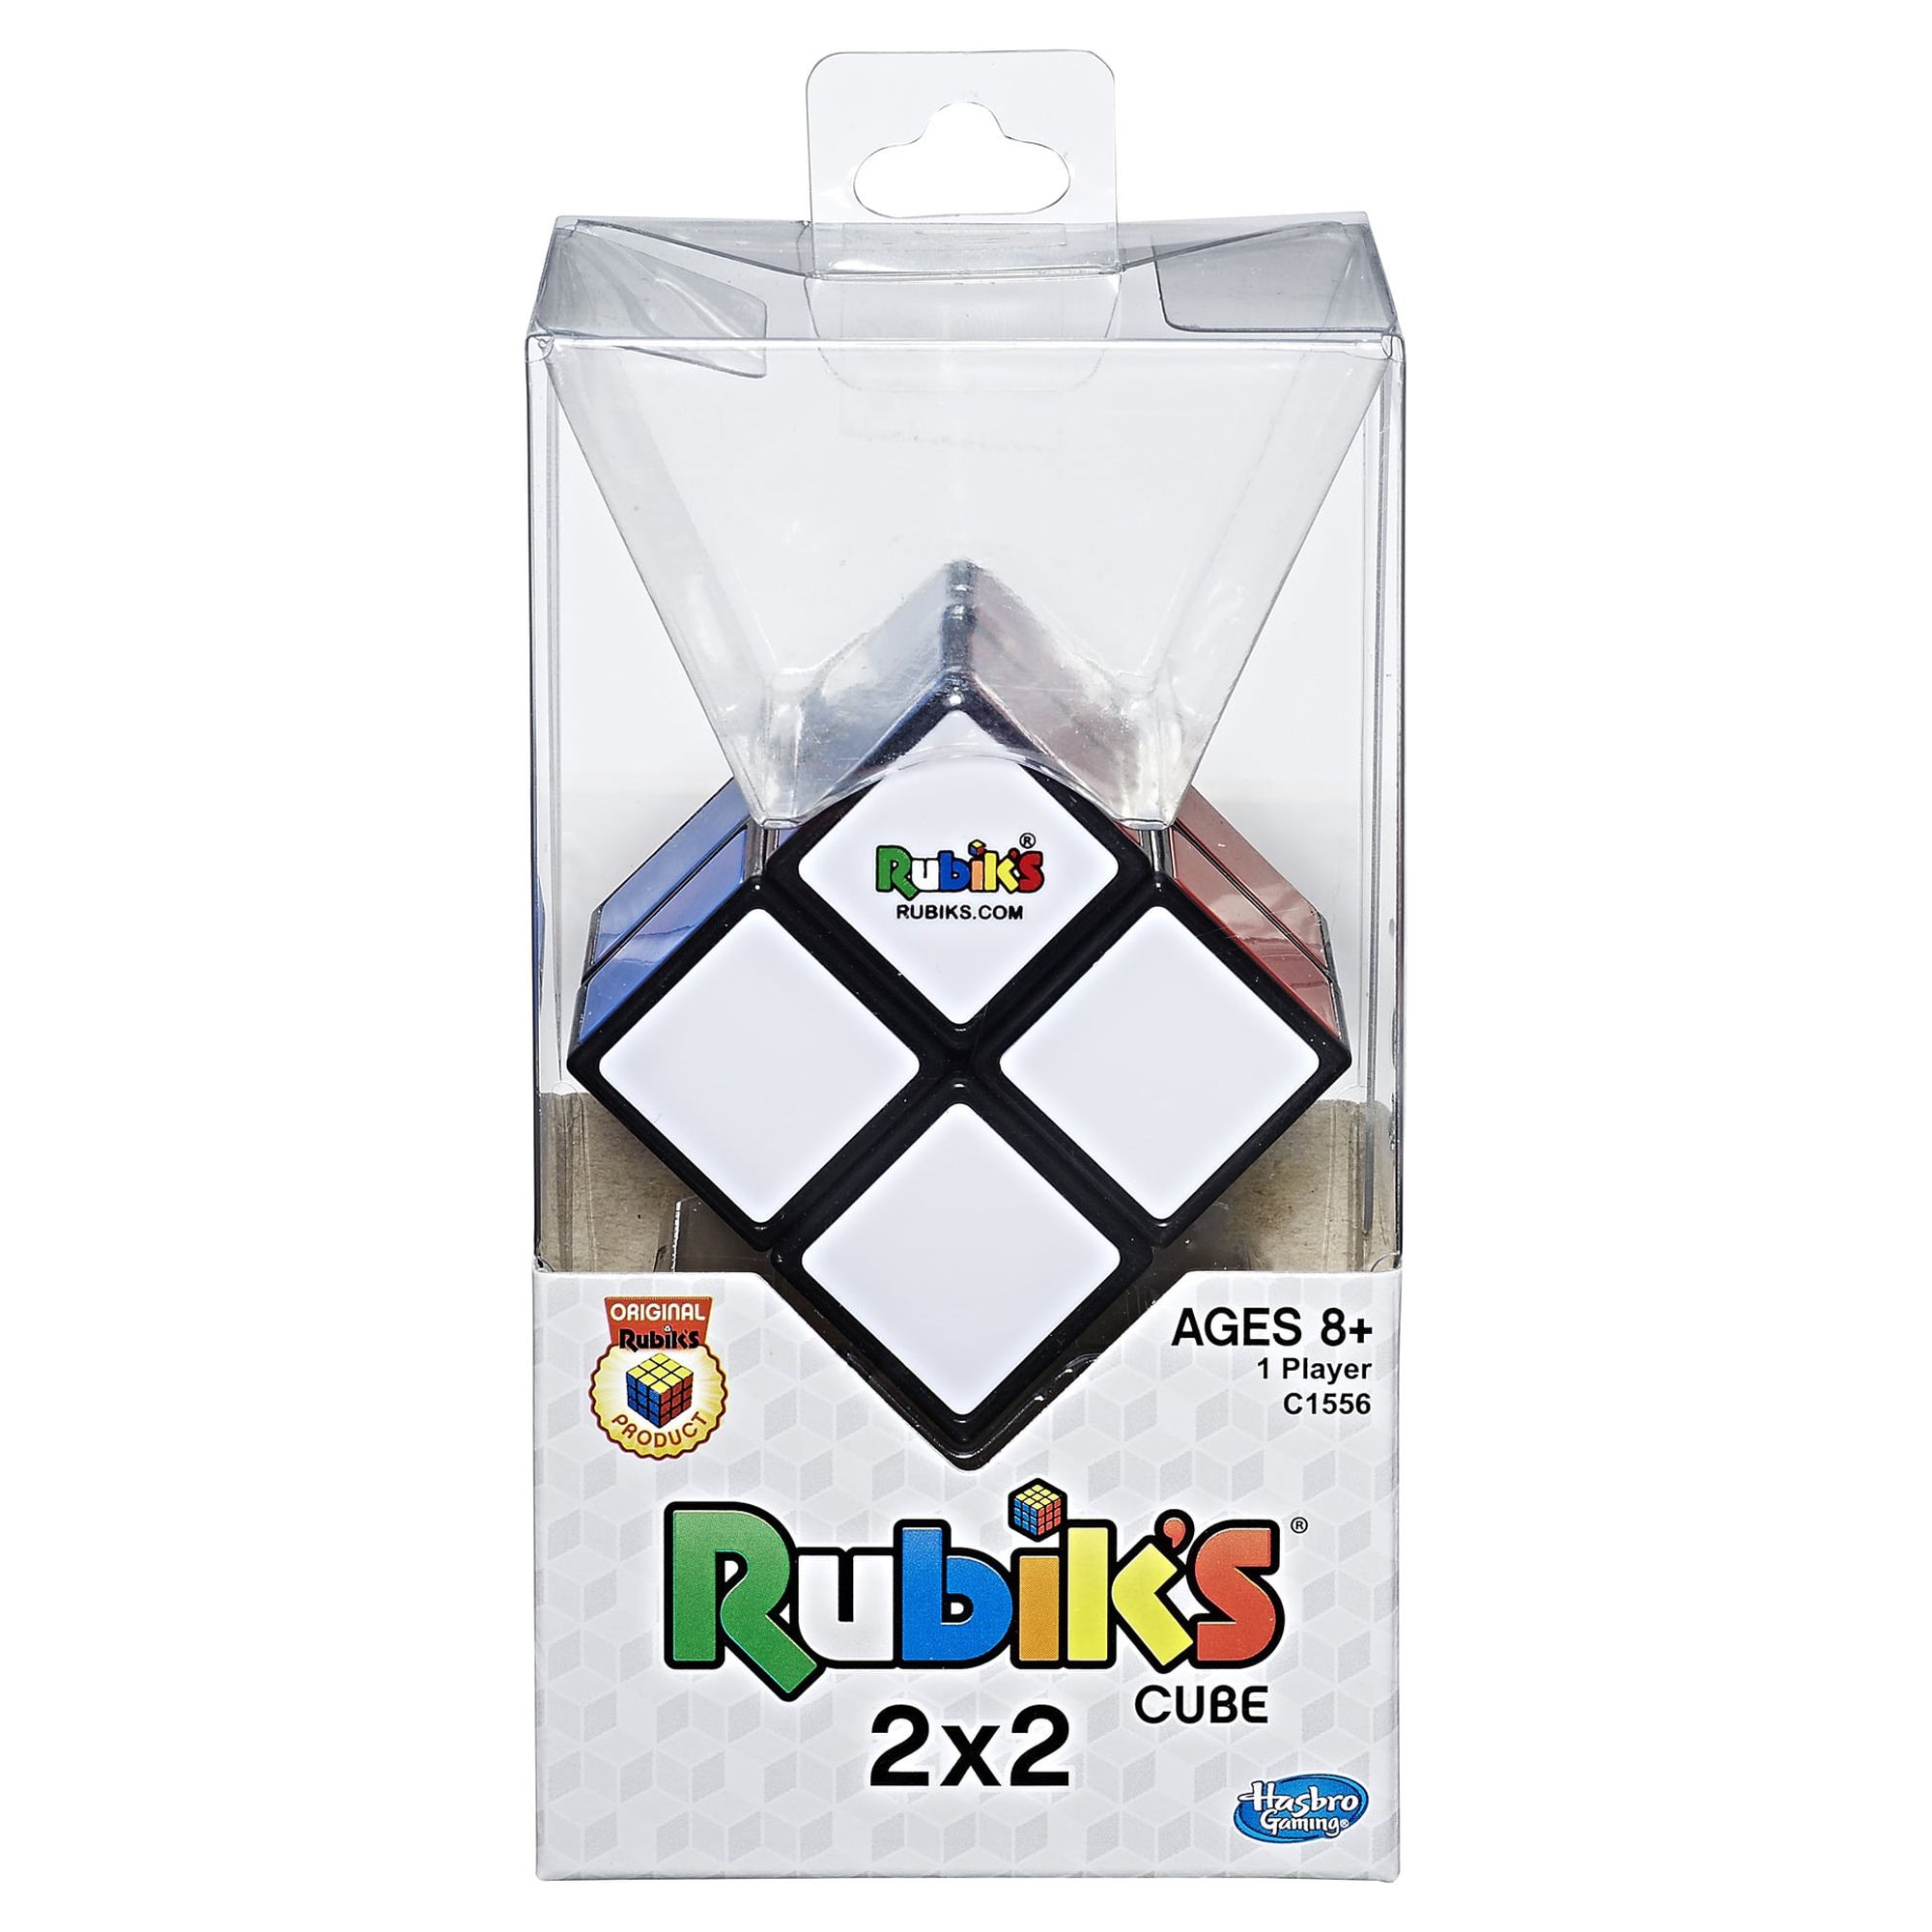 Hasbro Classic Rubik's 2X2 Puzzle Cube - image 1 of 9